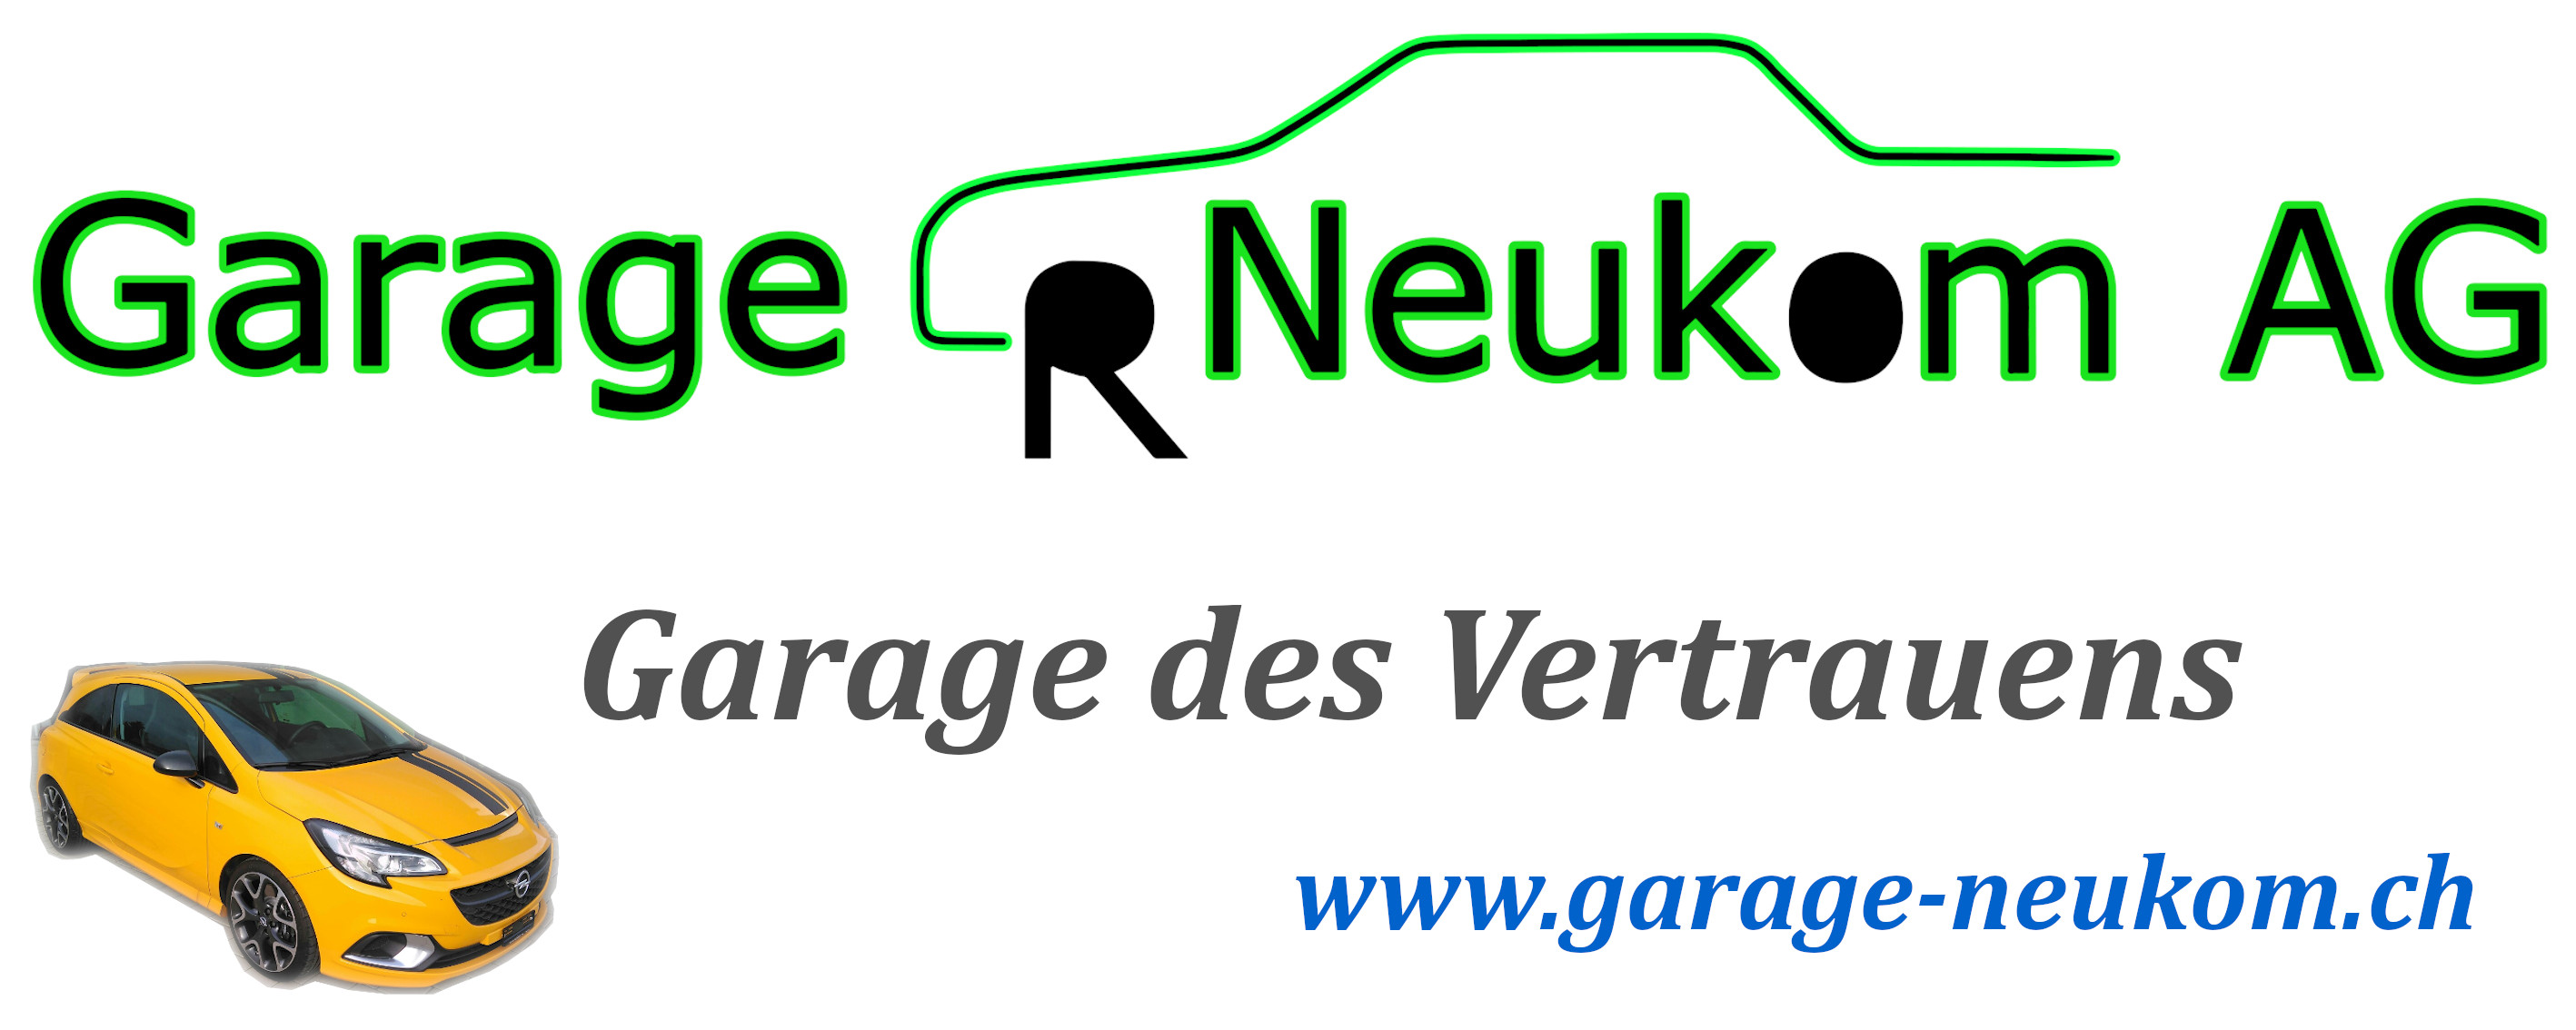 Garage R. Neukom AG